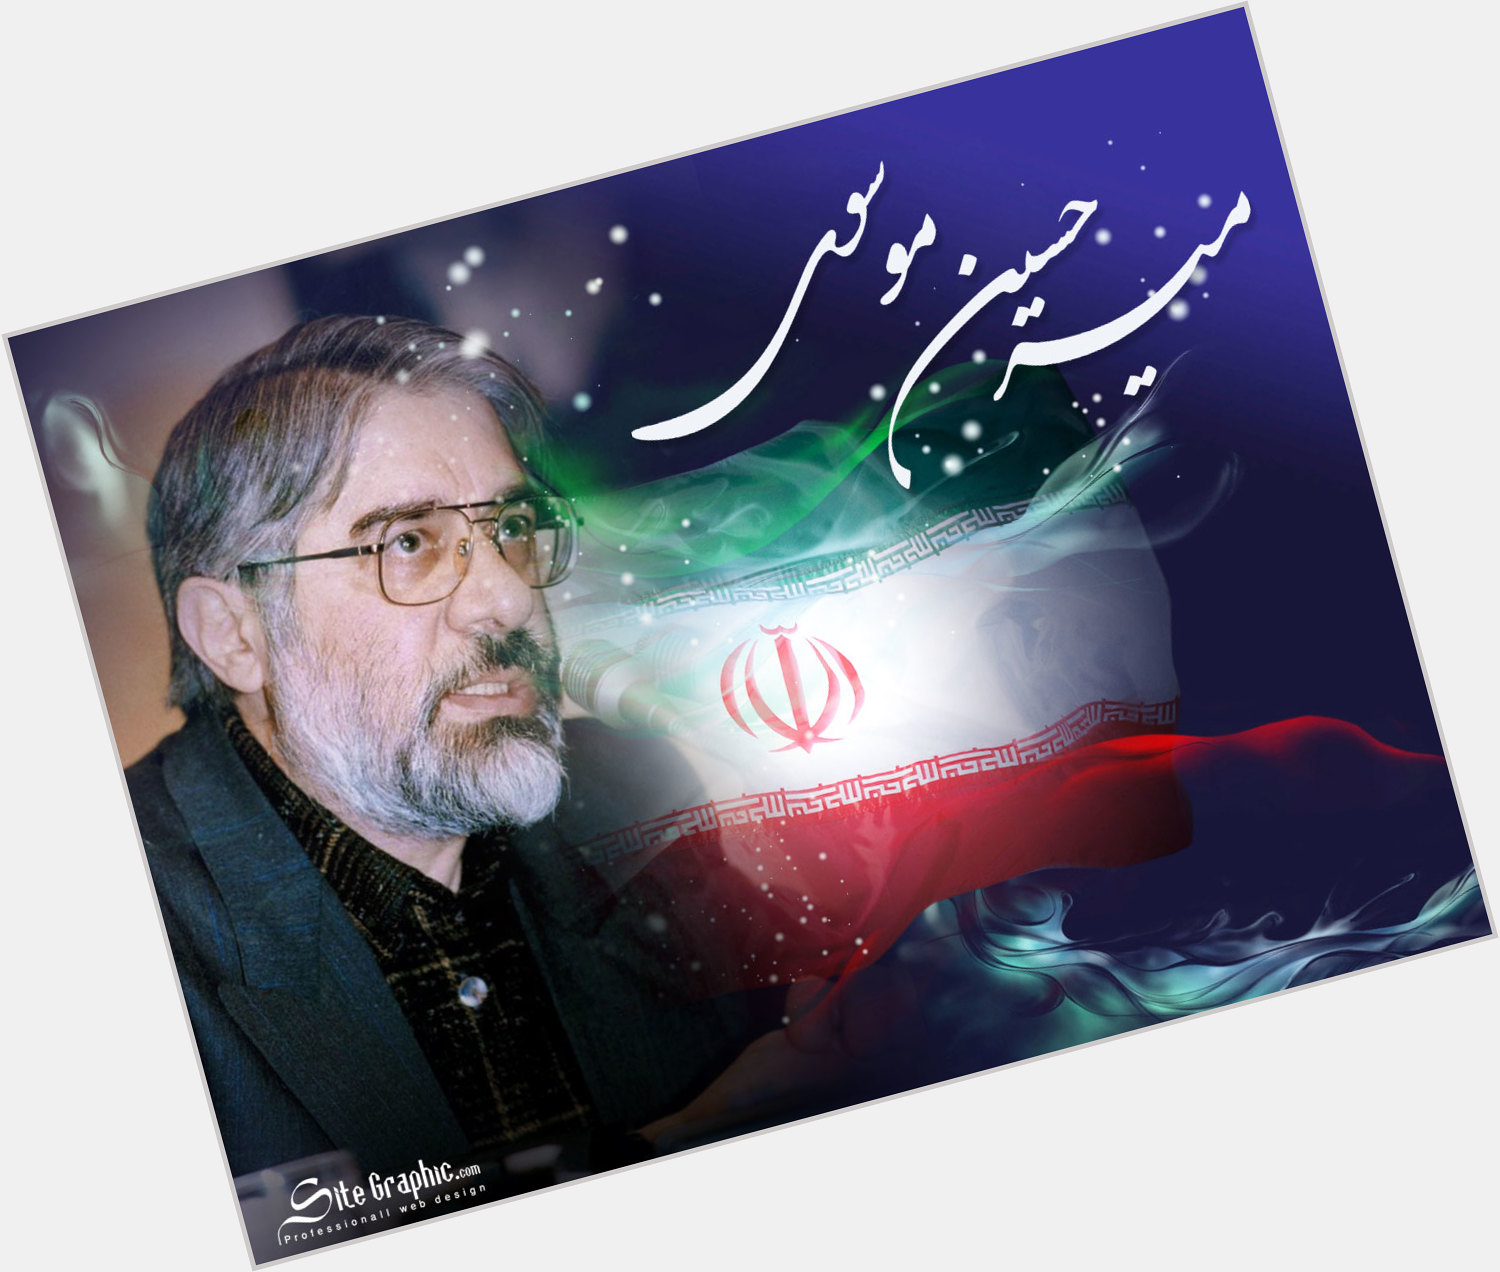 Mir Hossein Mousavi Slim body,  grey hair & hairstyles